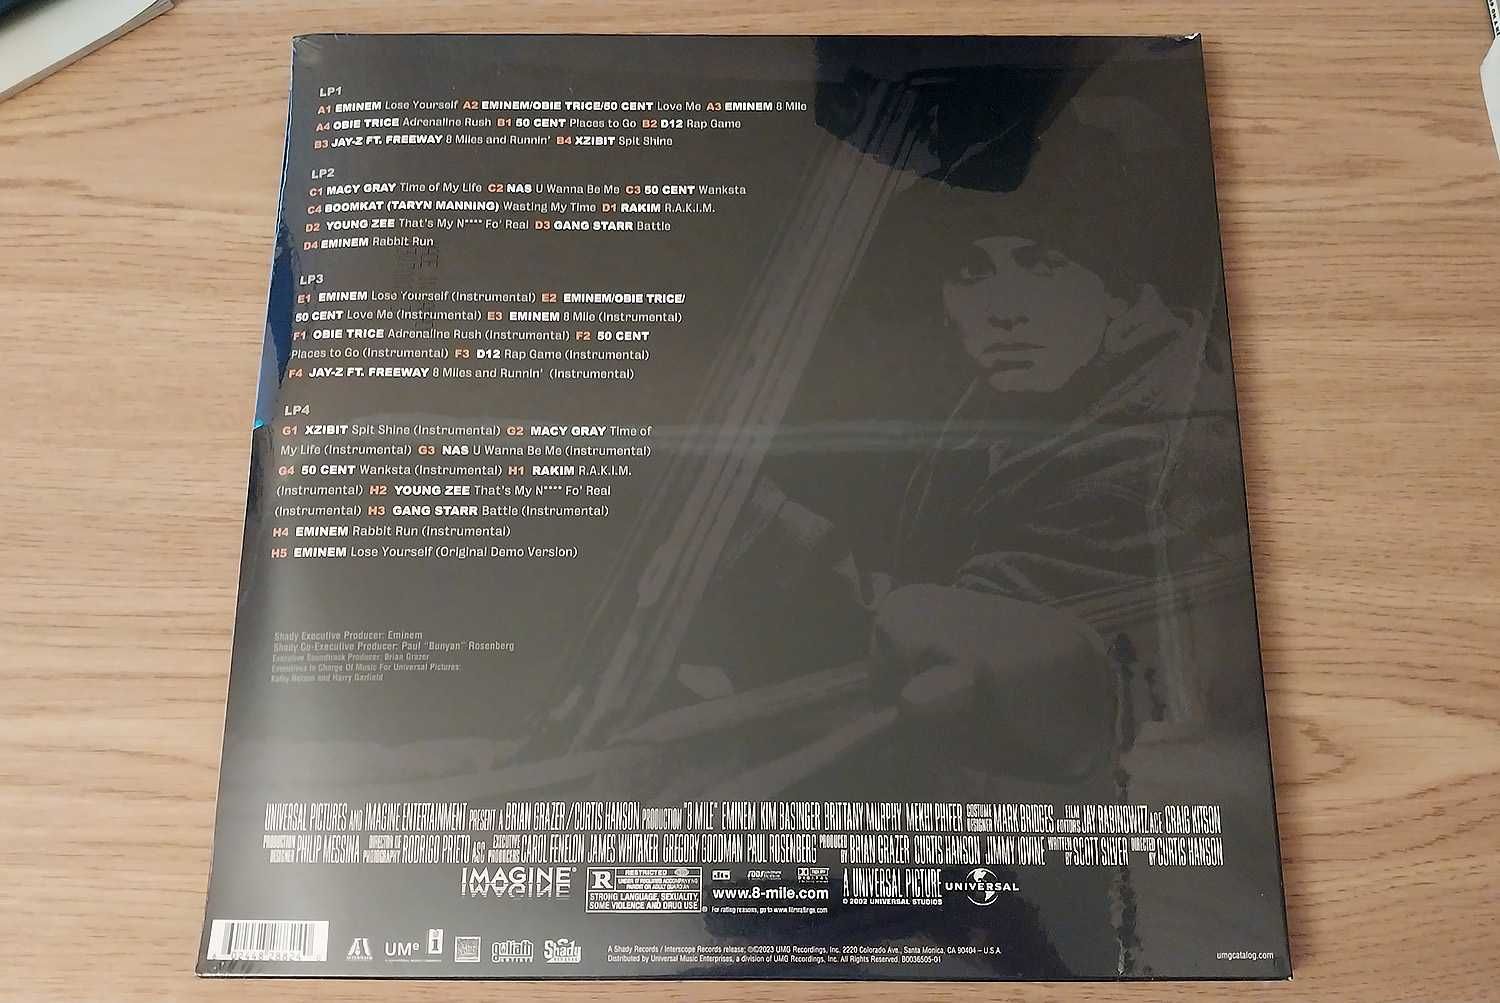 8 Mile OST (20th Anniversary Edition 4LP US) [Eminem, 50 Cent, Jay-Z]